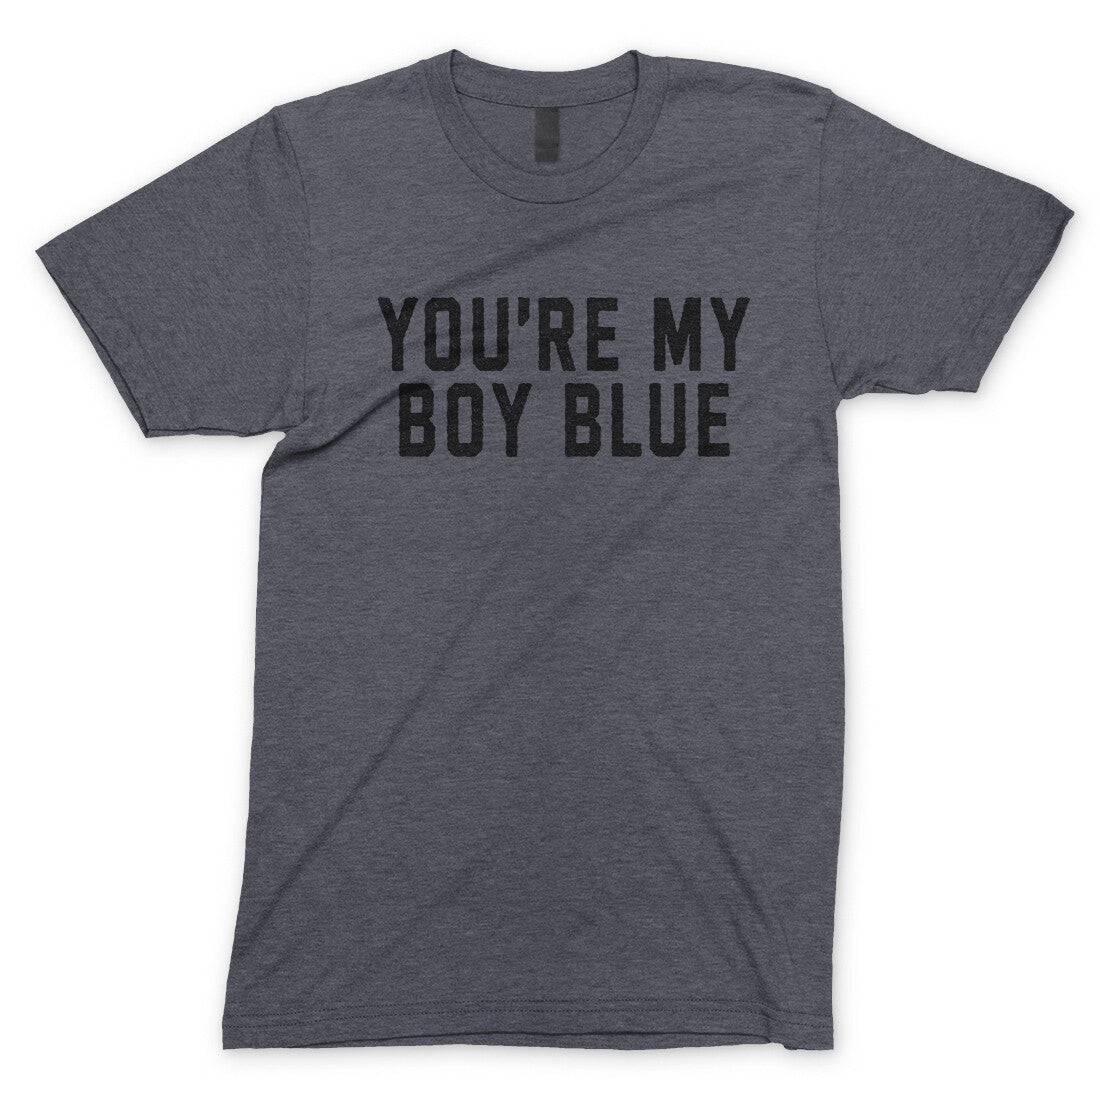 You're my Boy Blue in Dark Heather Color